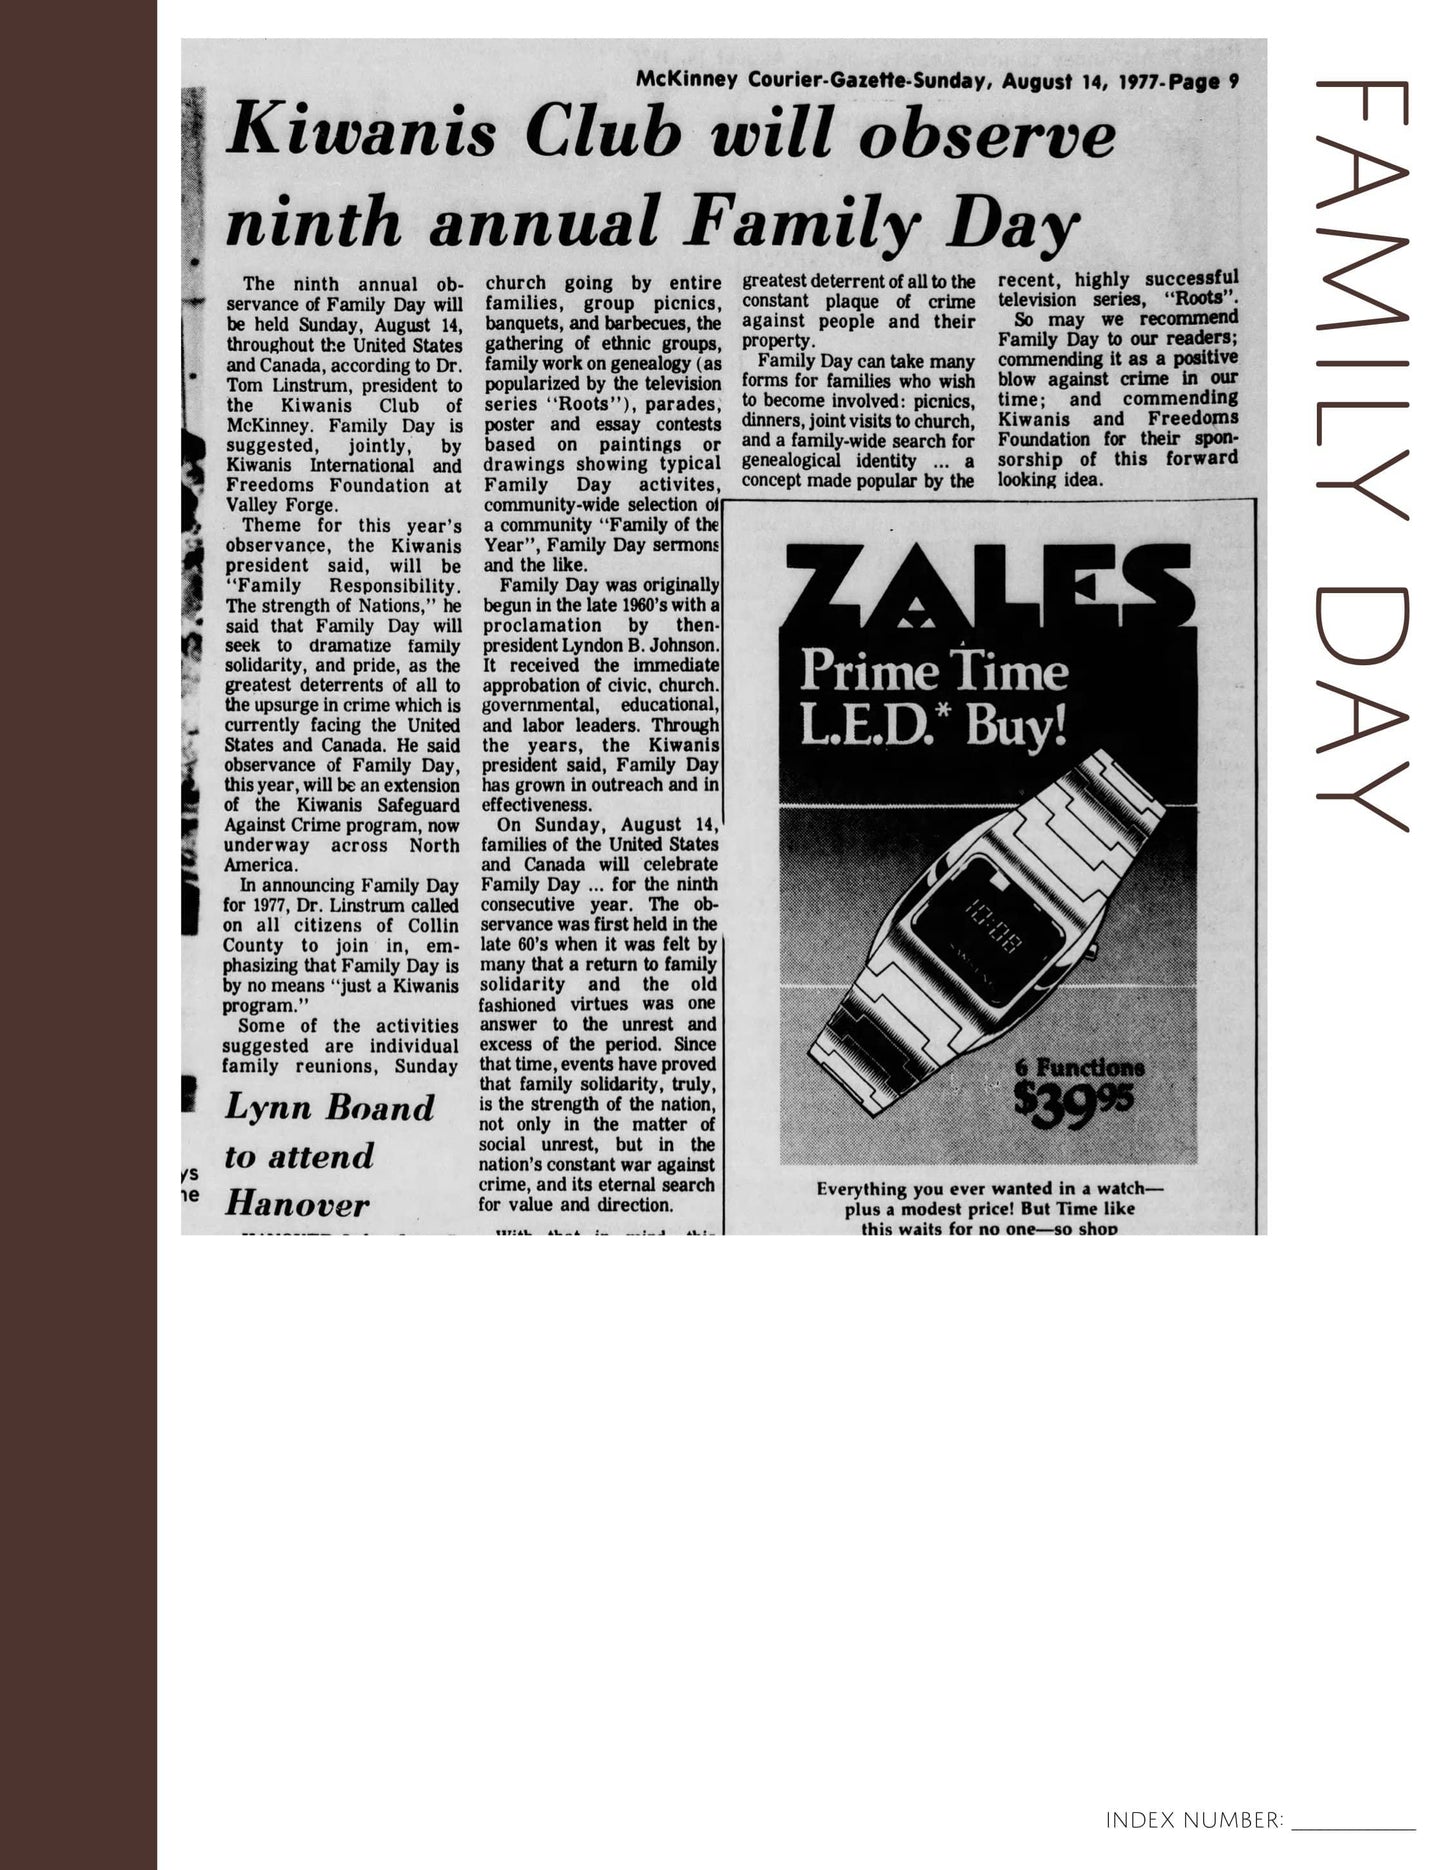 Family Day: Printable Genealogy Form (Digital Download)